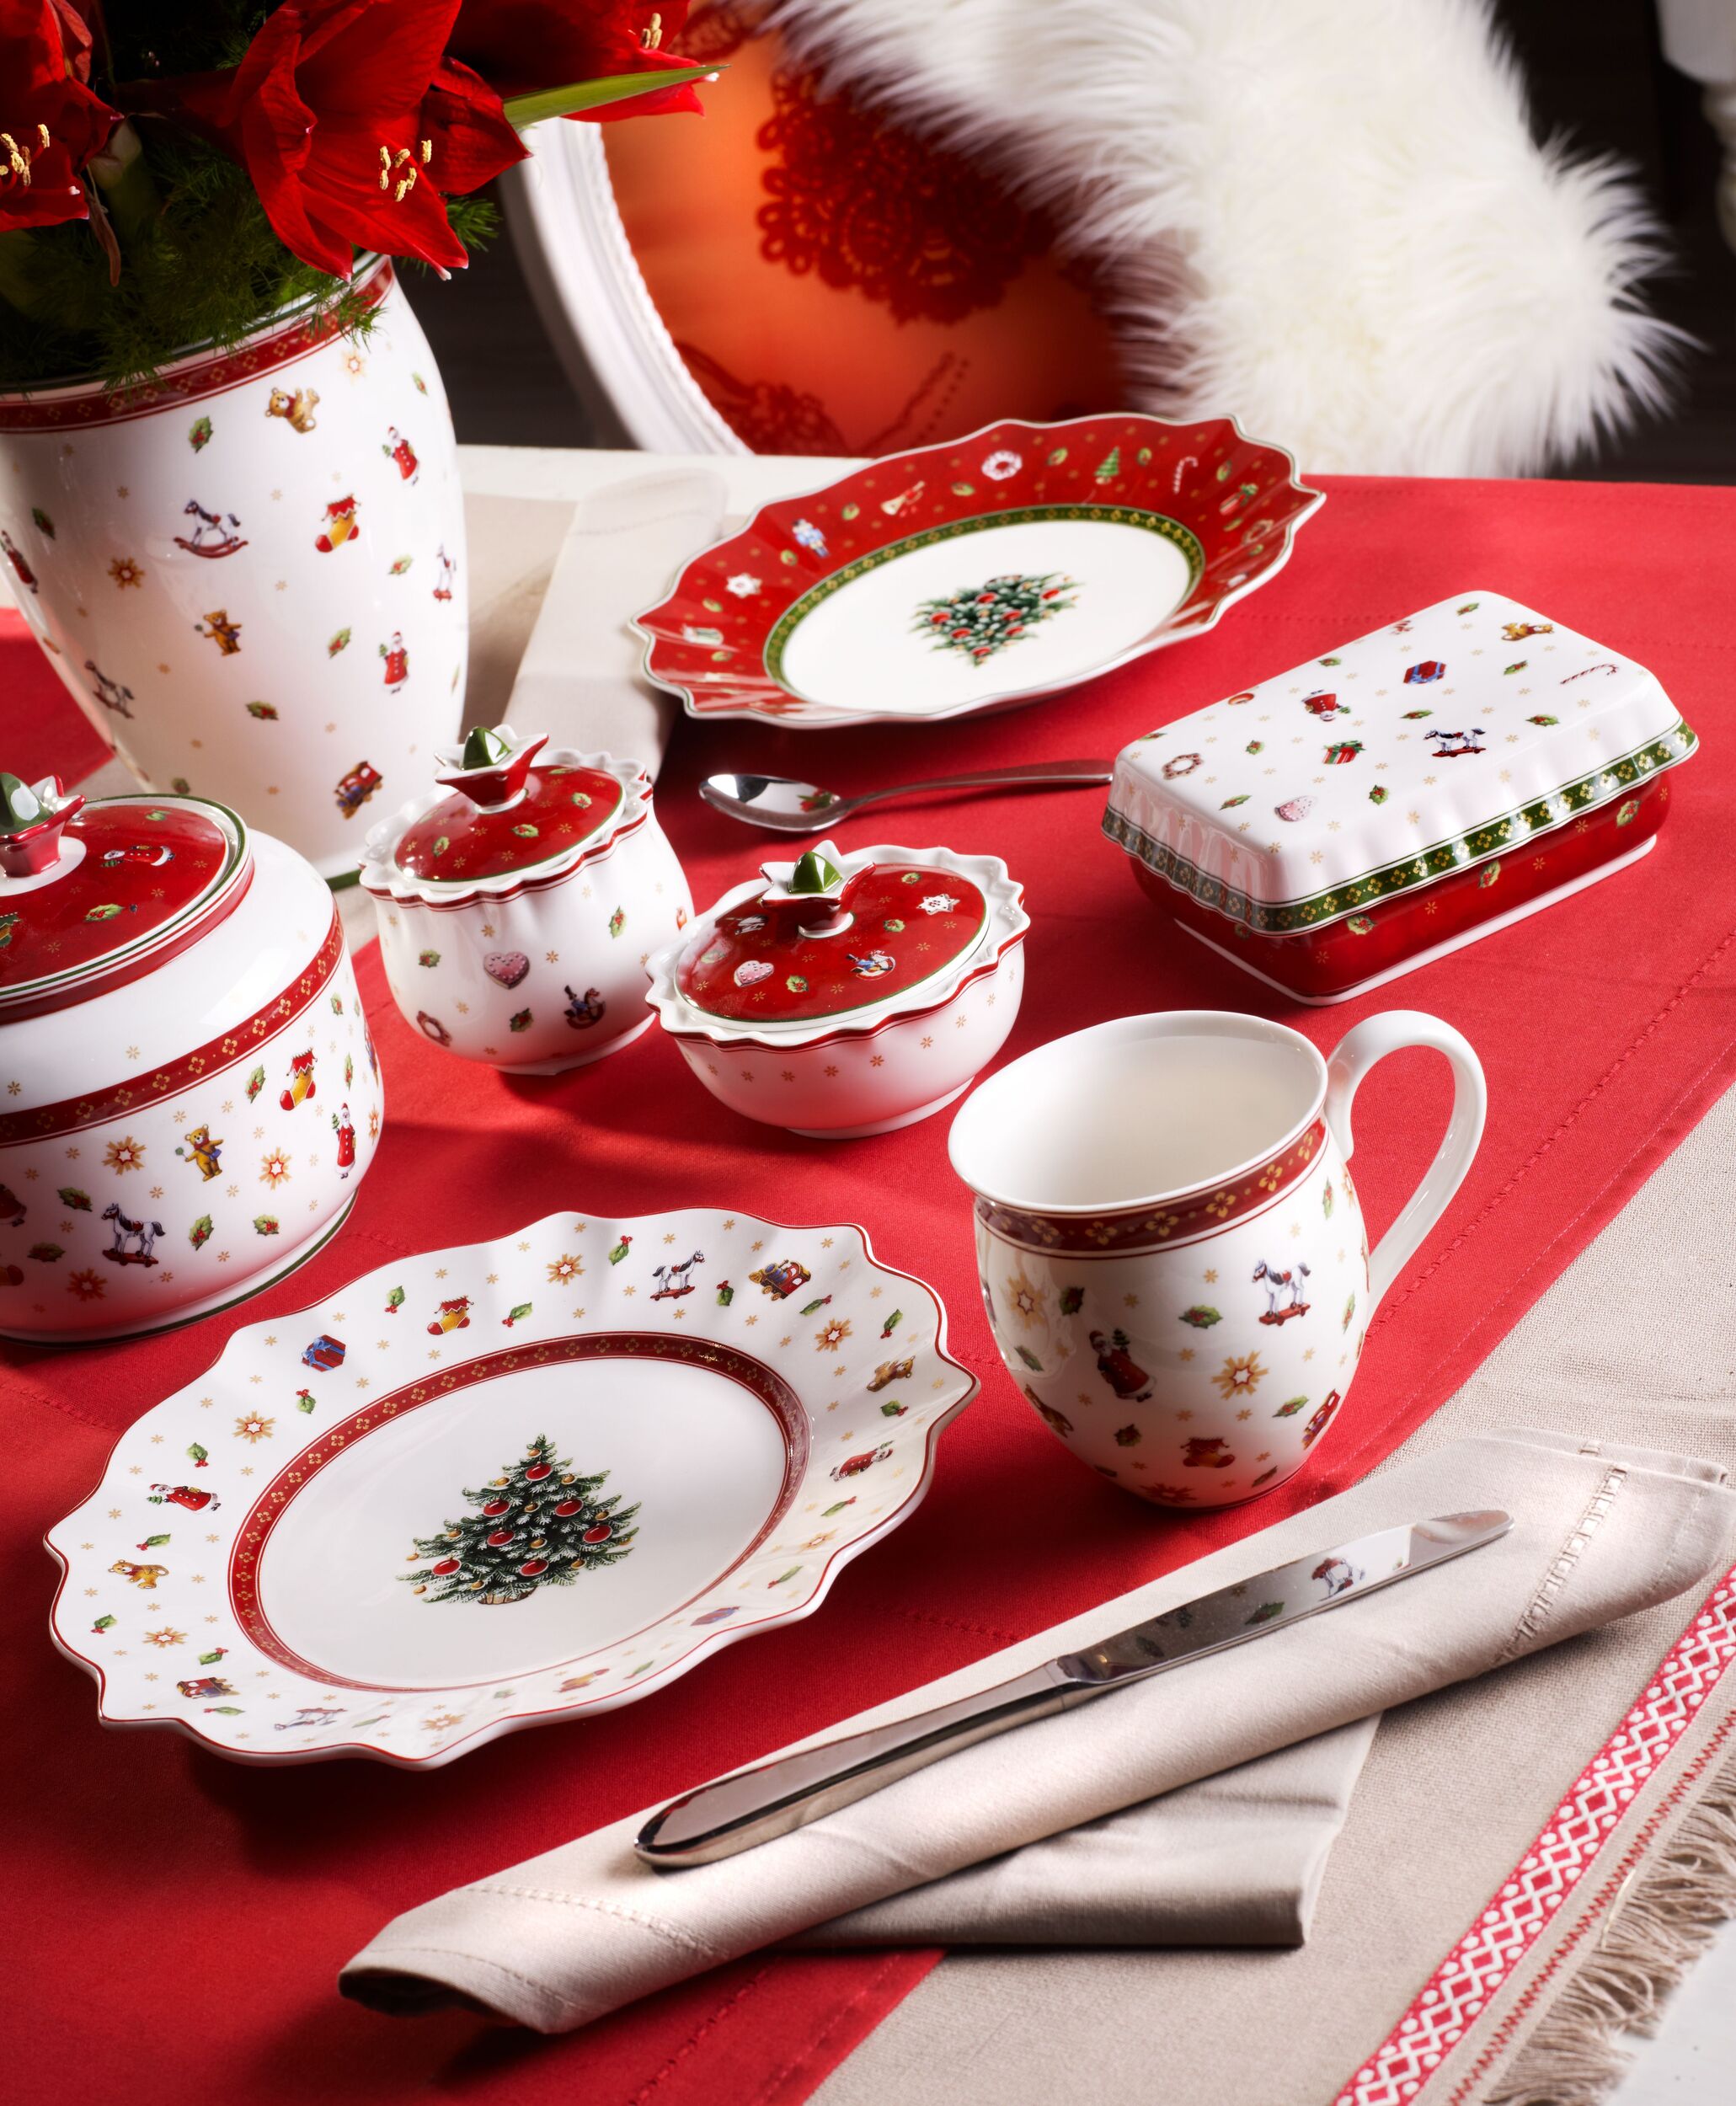 Villeroy & Boch Toy's Delight Dinnerware Set 12 Pcs in Porcelain, Christmas